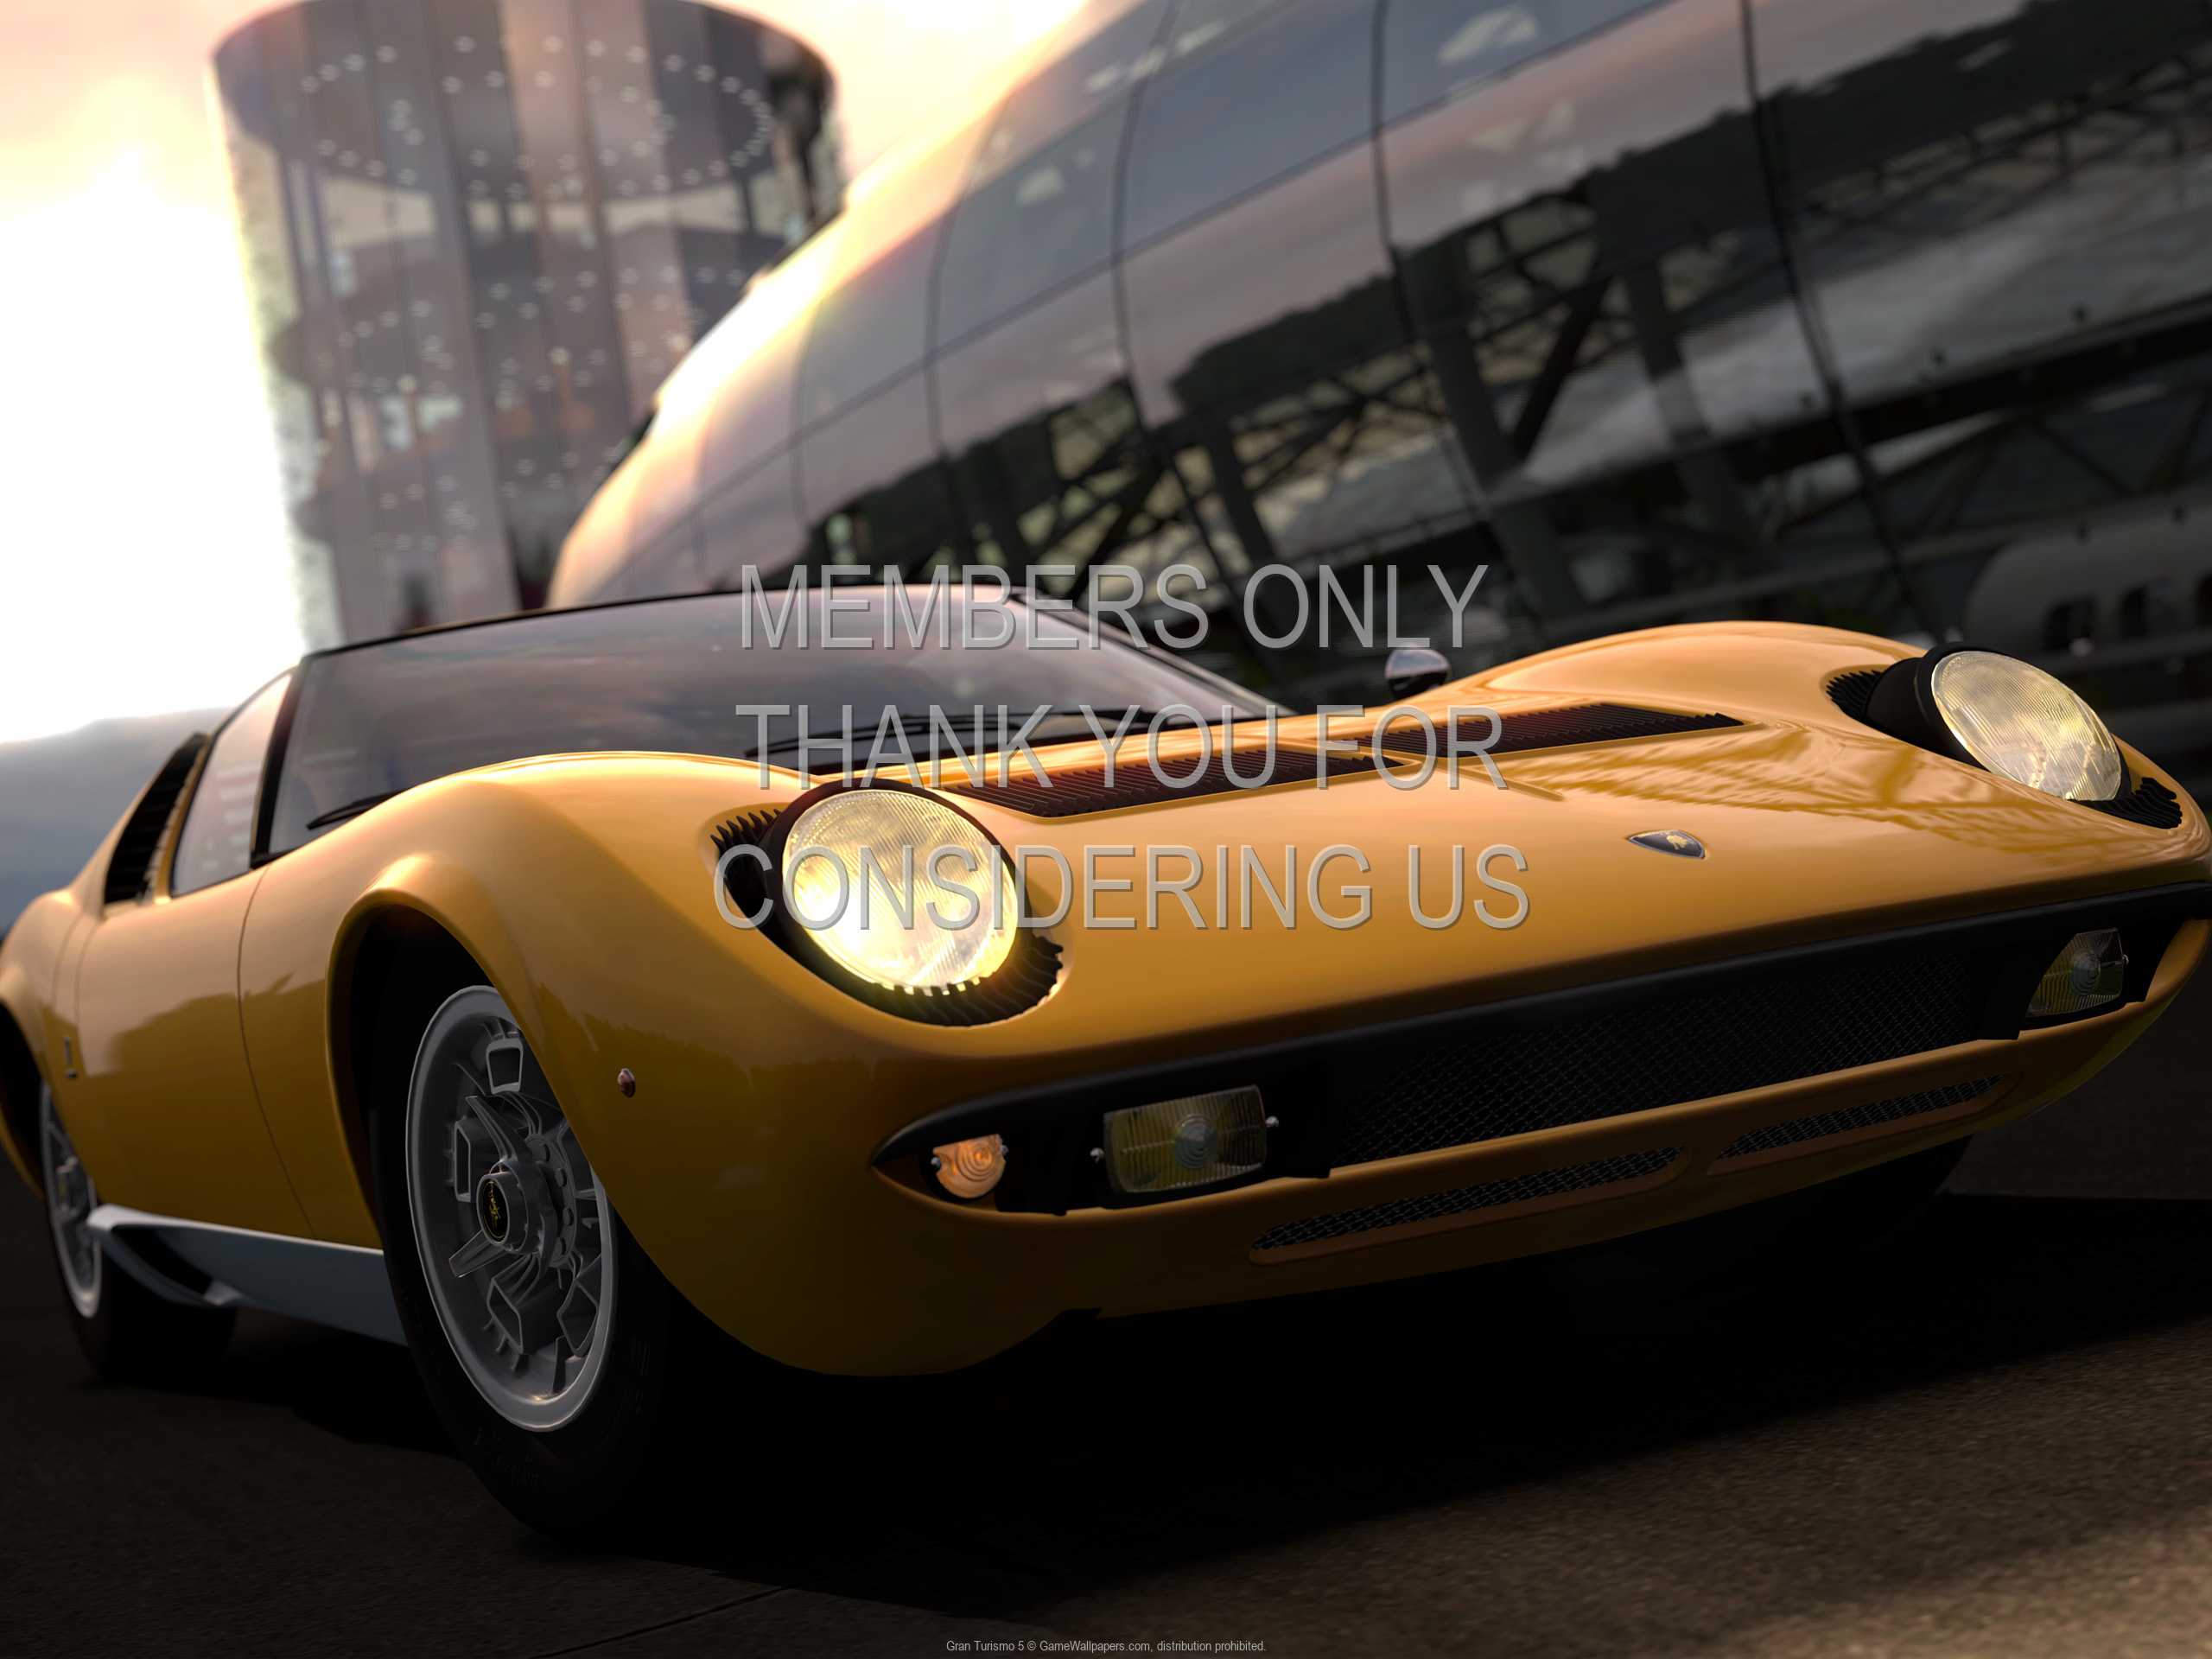 Gran Turismo 5 1080p Horizontal Mobile wallpaper or background 24